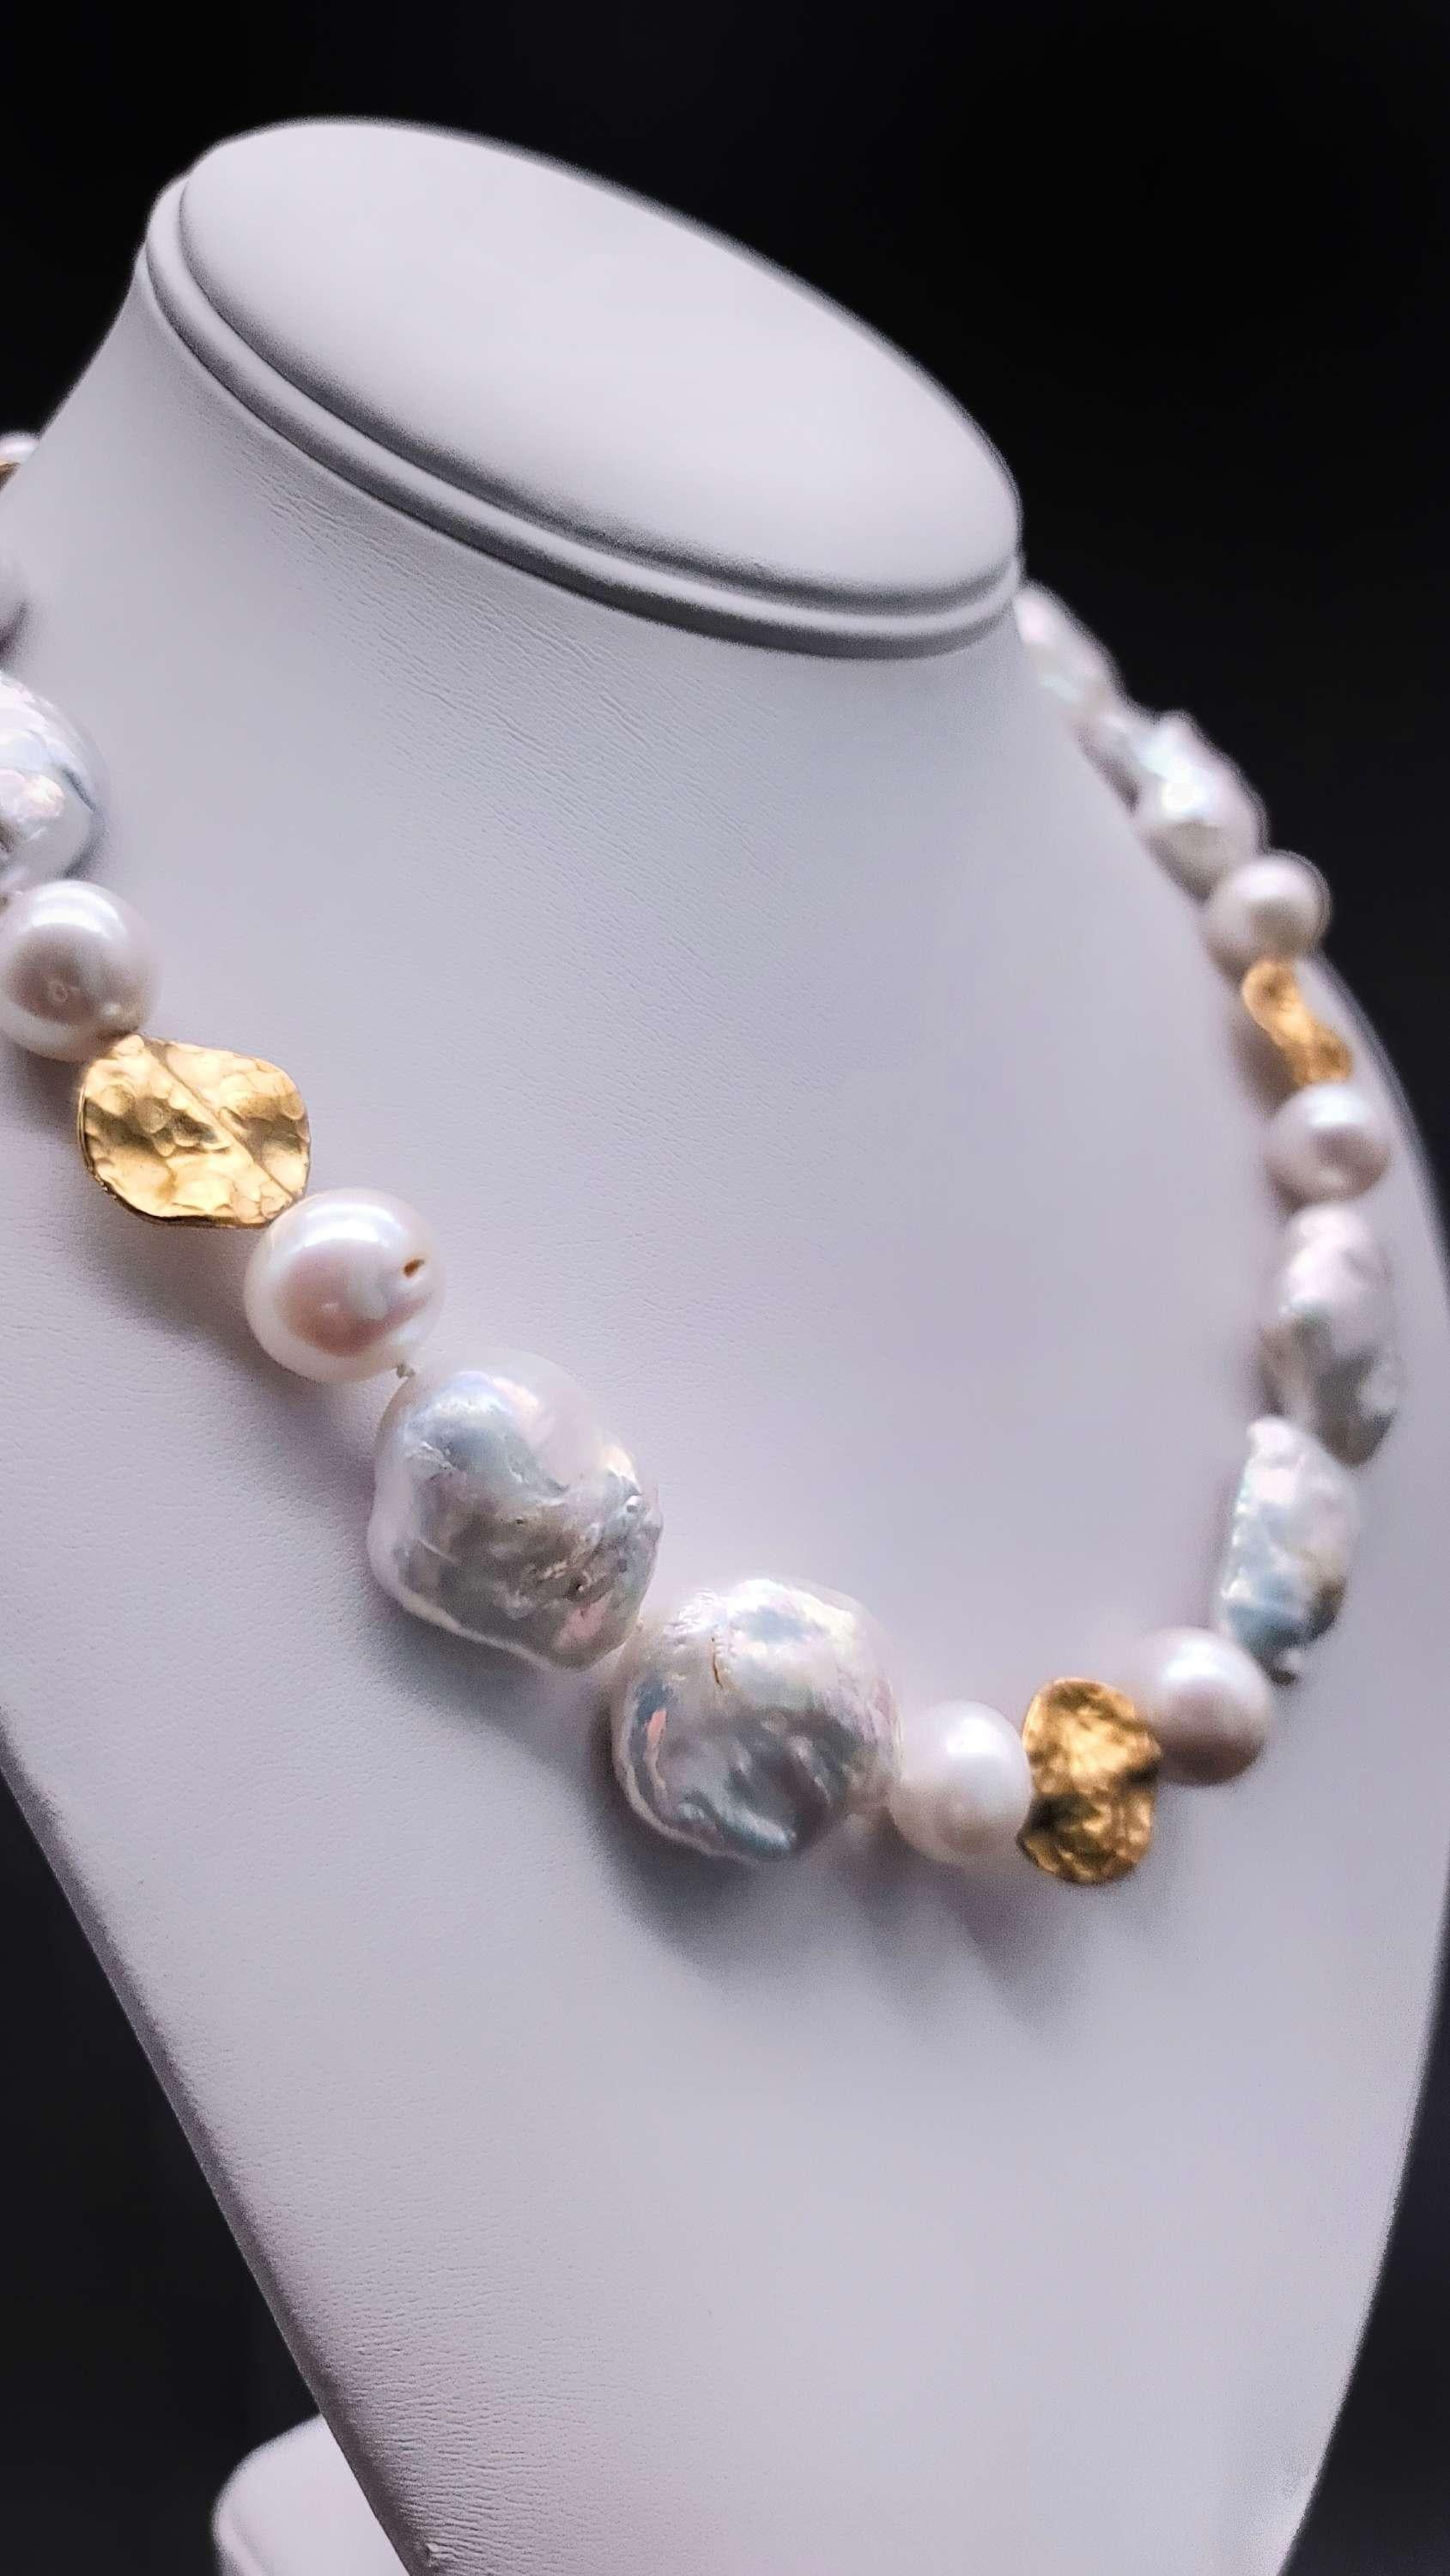 Contemporain A.jeschel Collier de perles baroques en vente